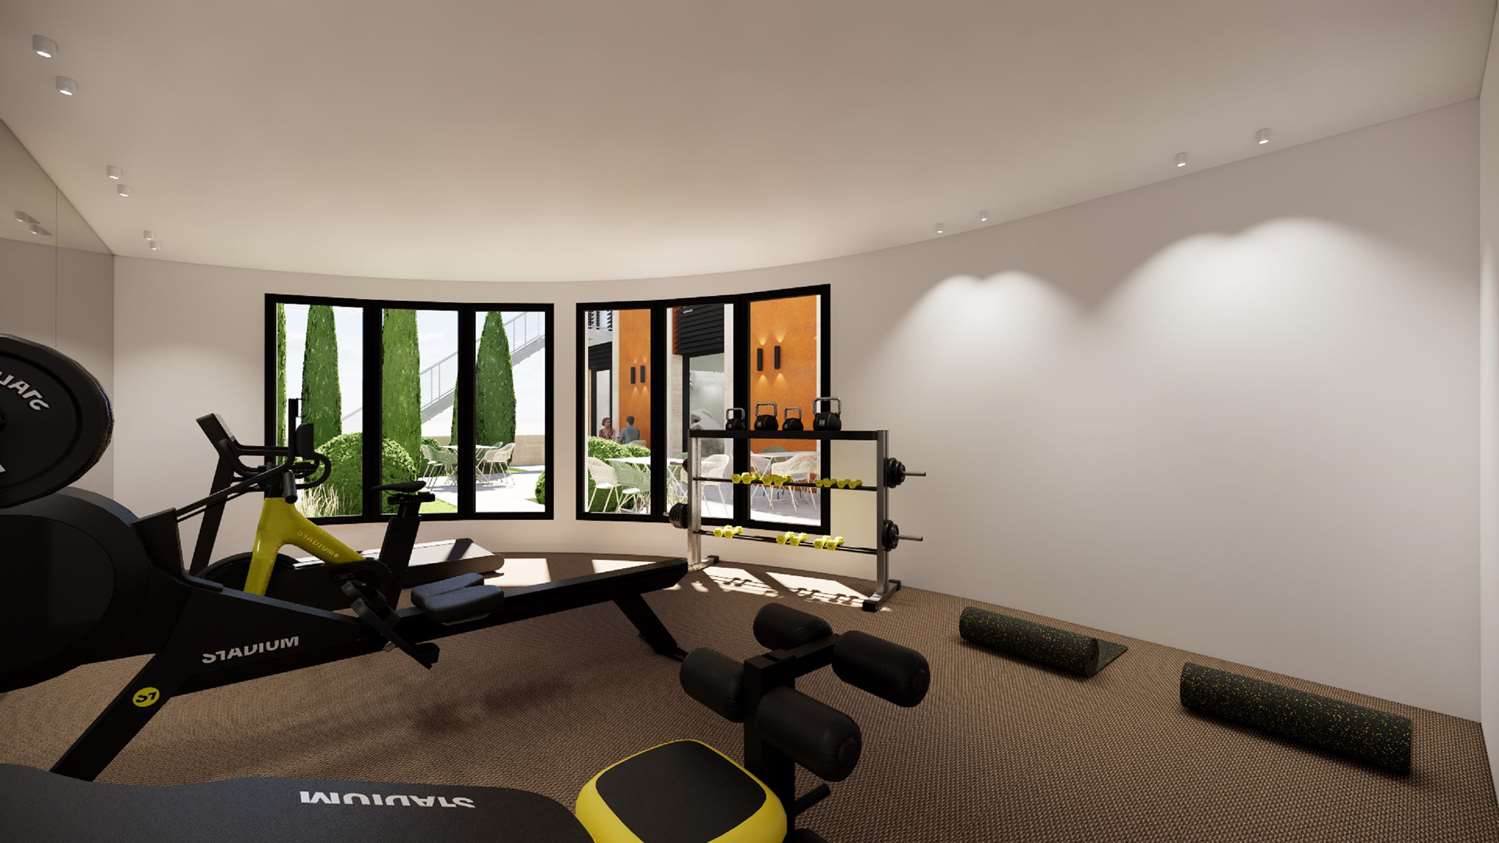 36 ideas de Mini gym en casa  gimnasio en casa, diseño de gimnasio, diseño  de gimnasio en casa